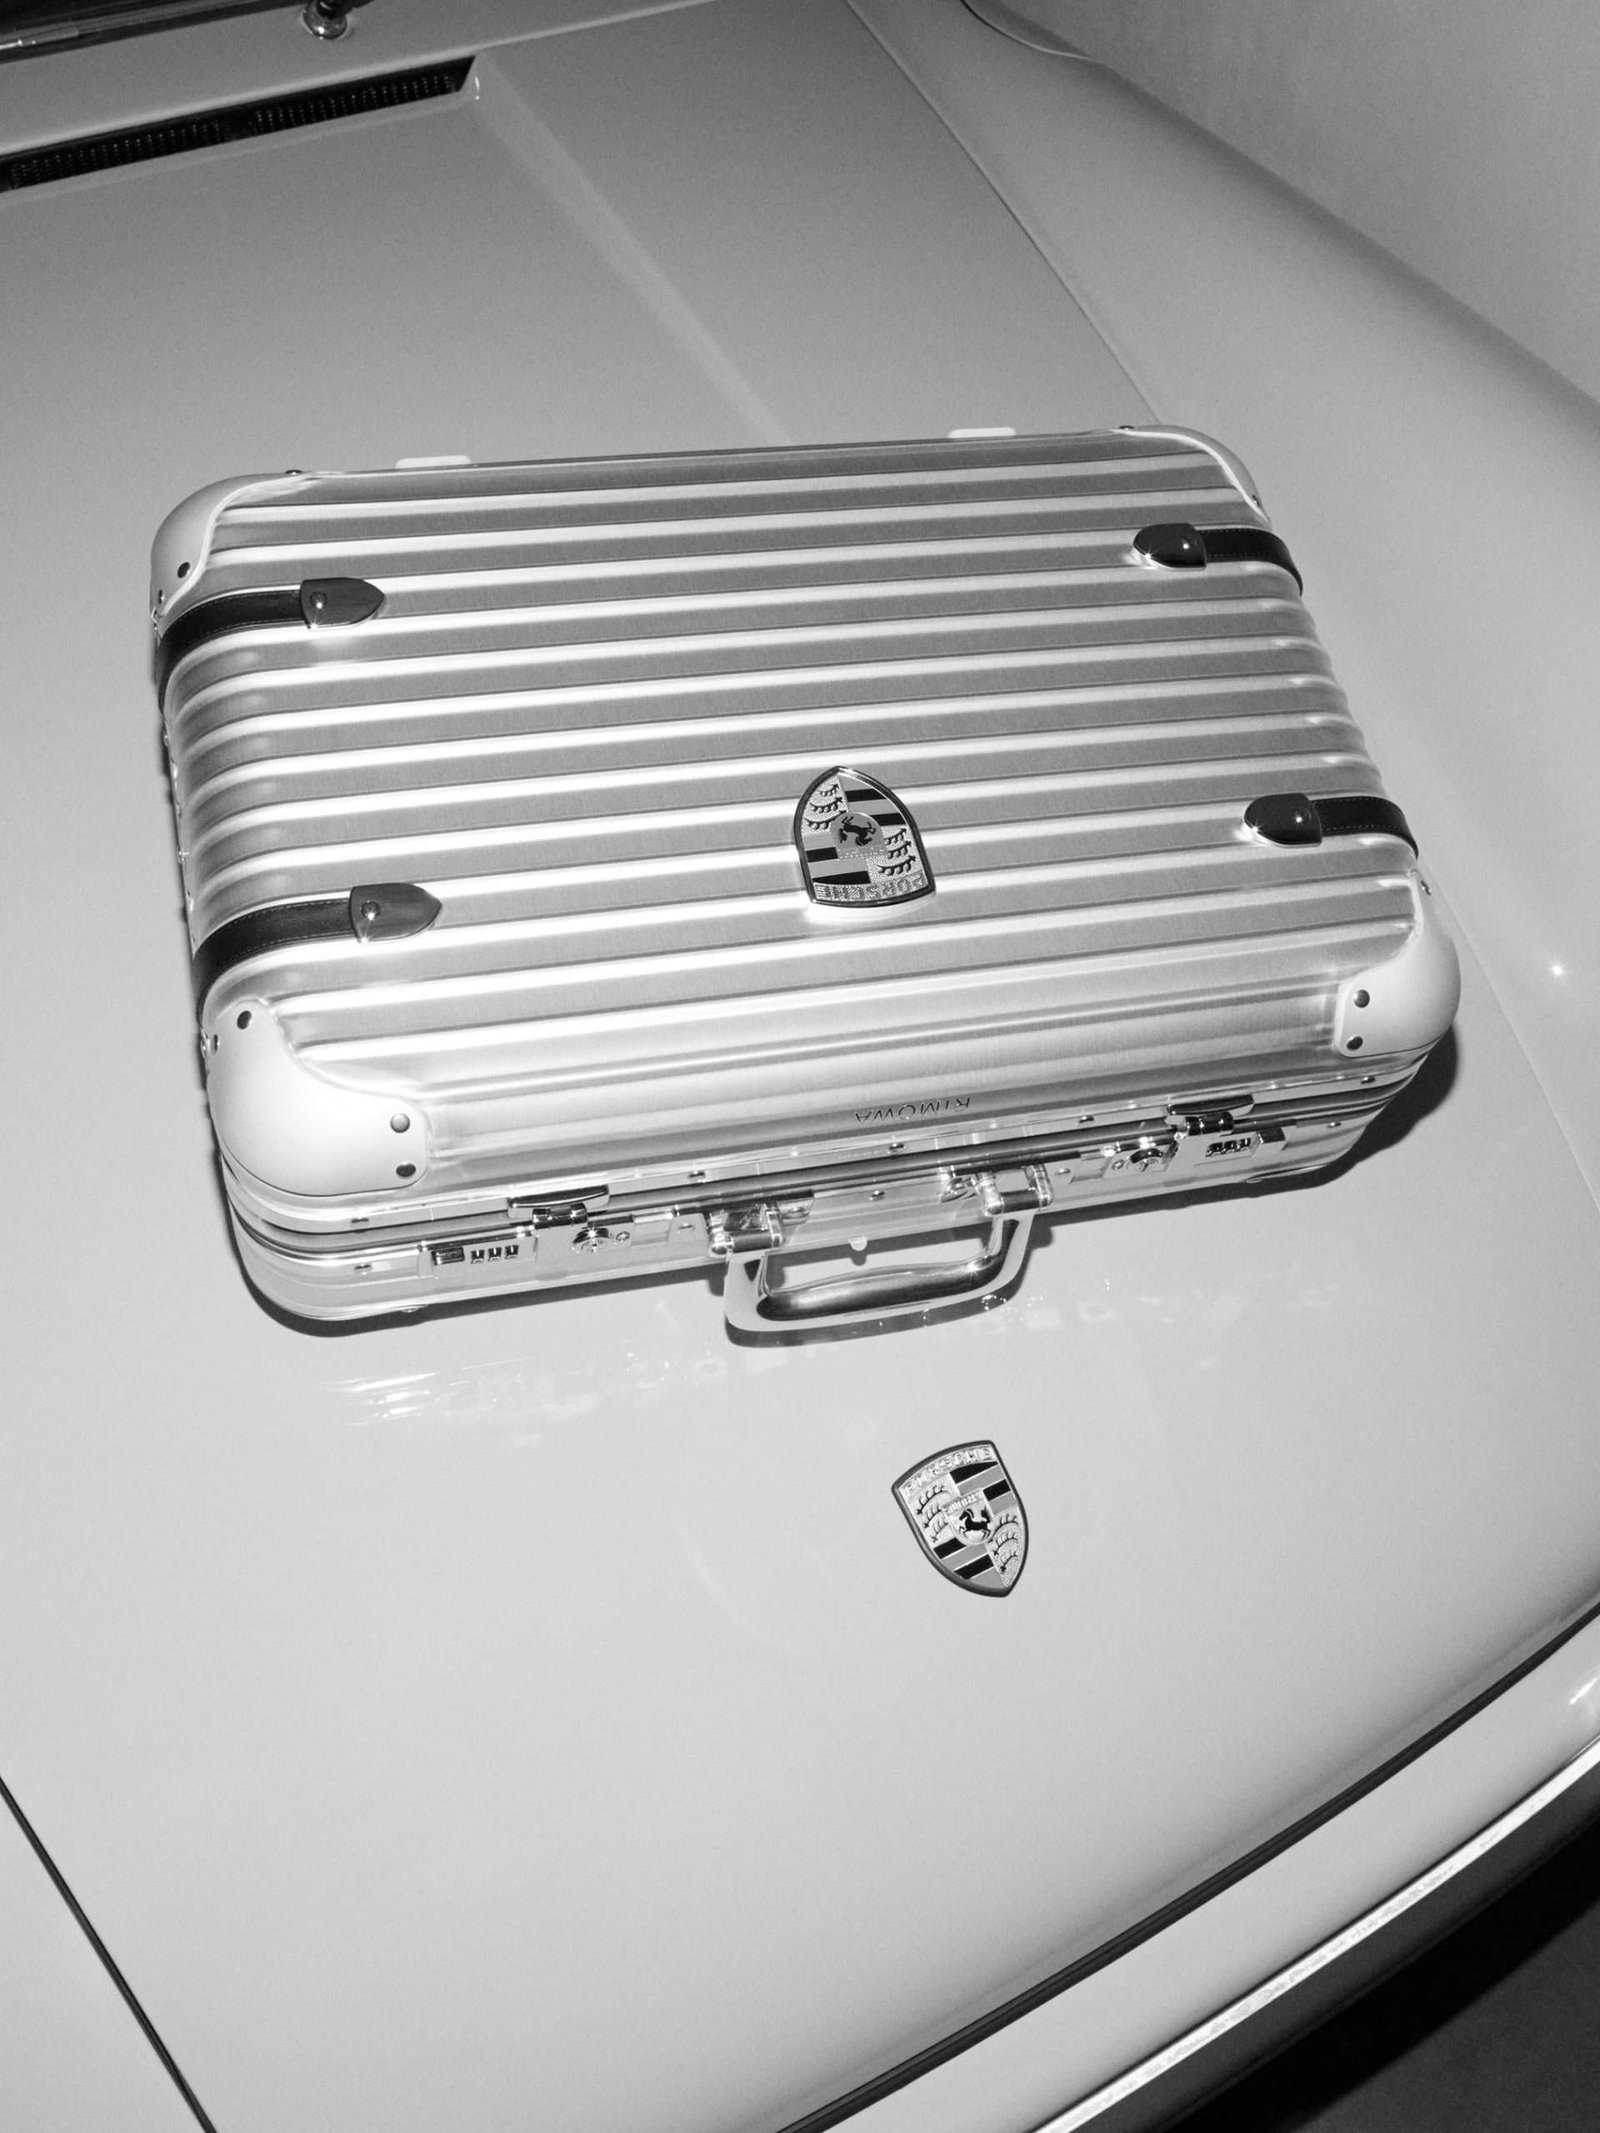 RIMOWA x porsche maleta coche Porsche 911 viaje equipaje